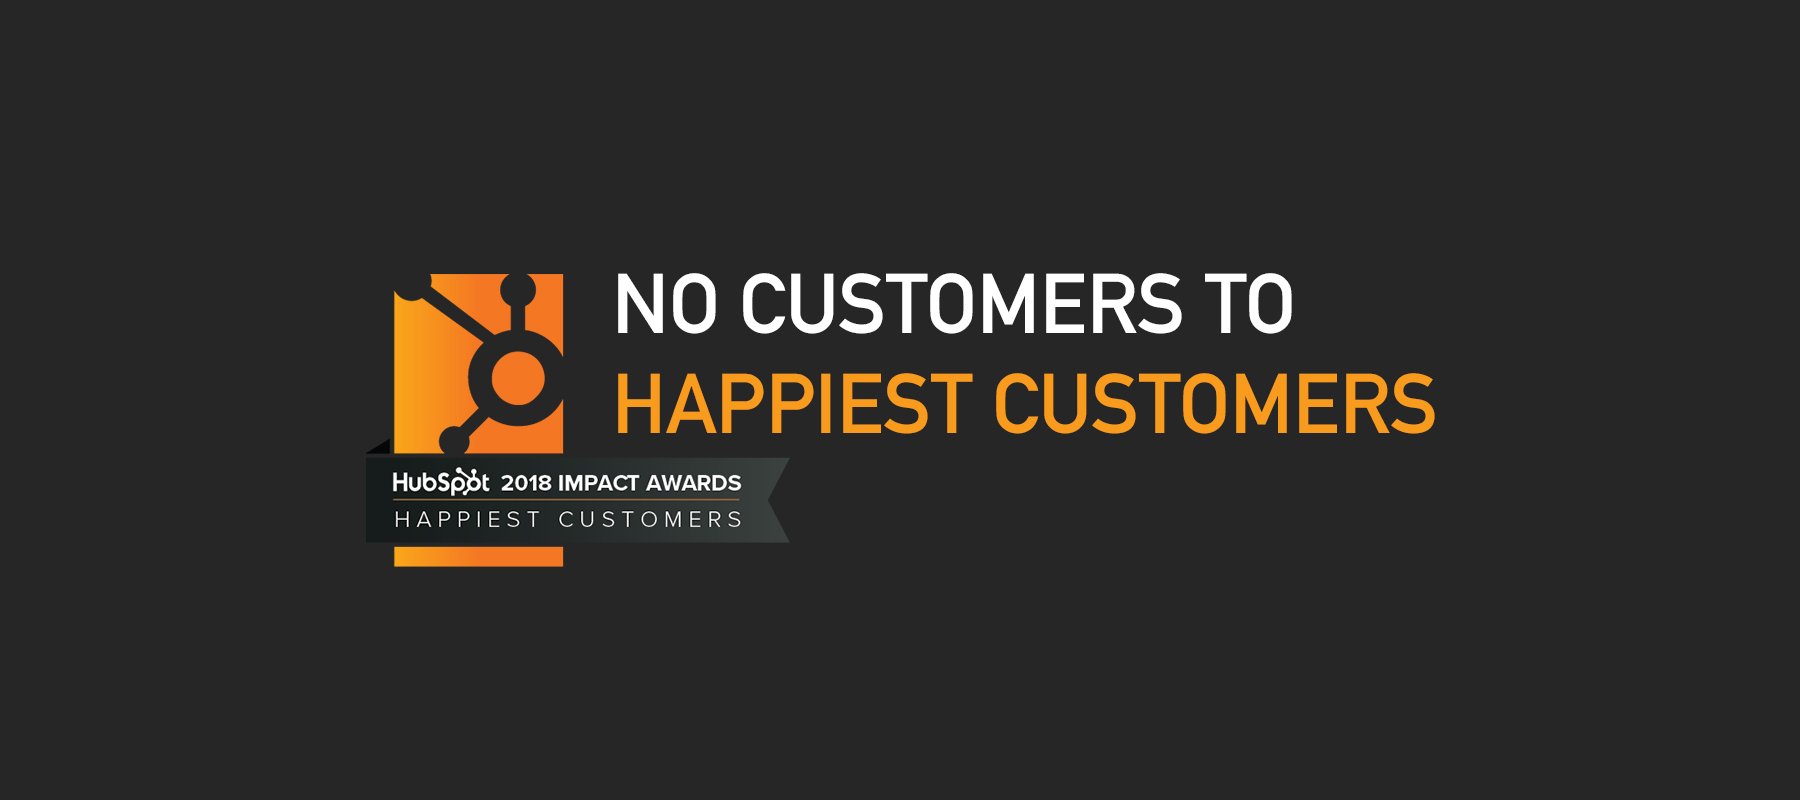 No Customers to Hubspot Happiest Customers